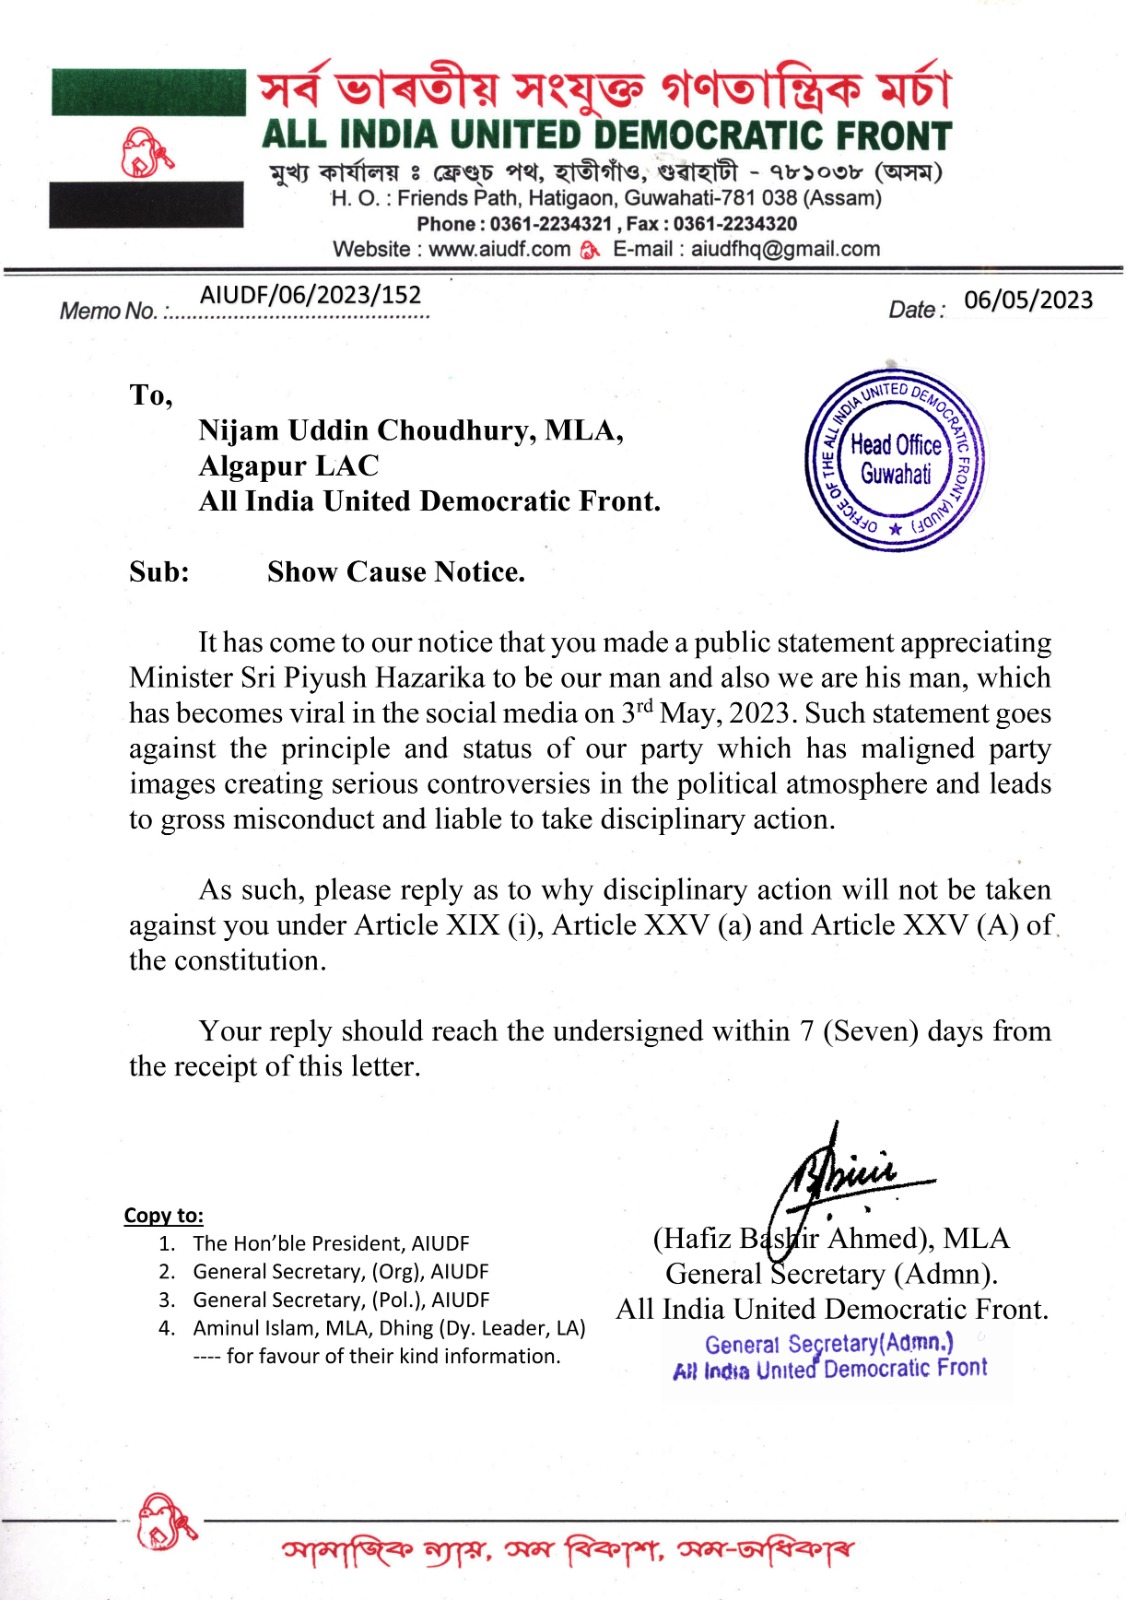 Show Cause notice to AIUDF MLA